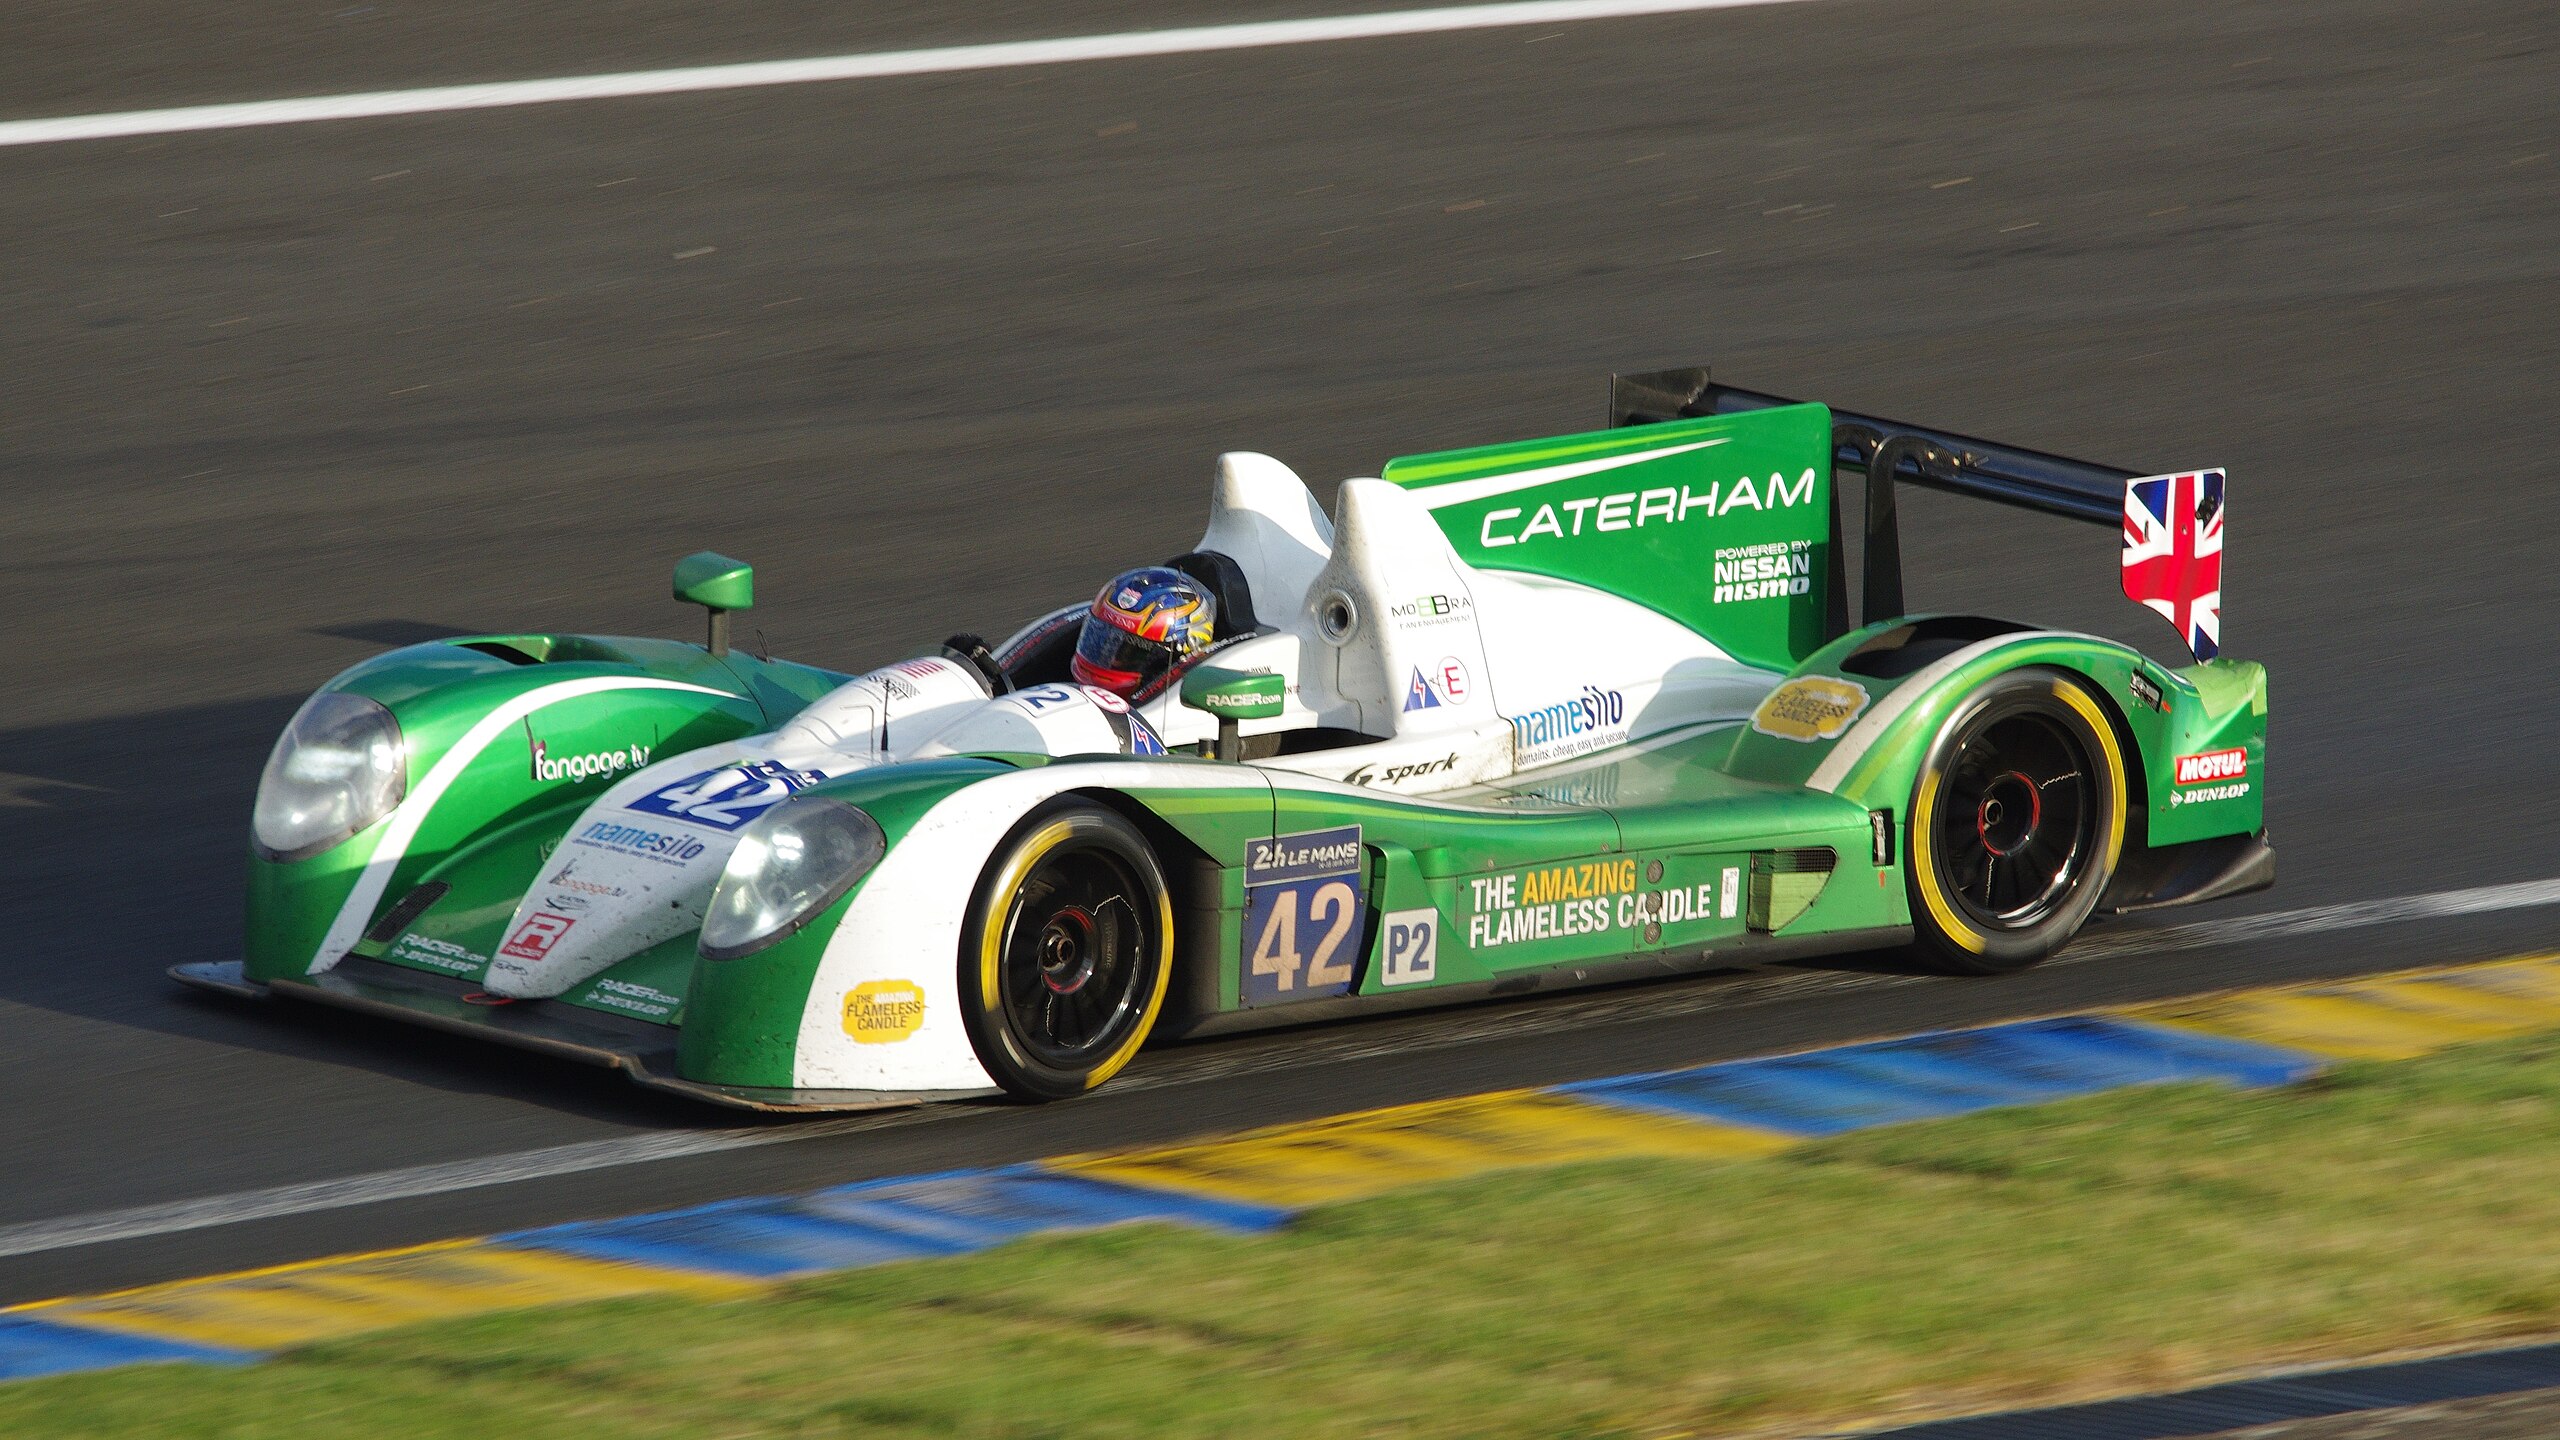 File:Le Mans 2014 - LMP2 - -42 Caterham Racing Zytek Z11SN-Nissan 